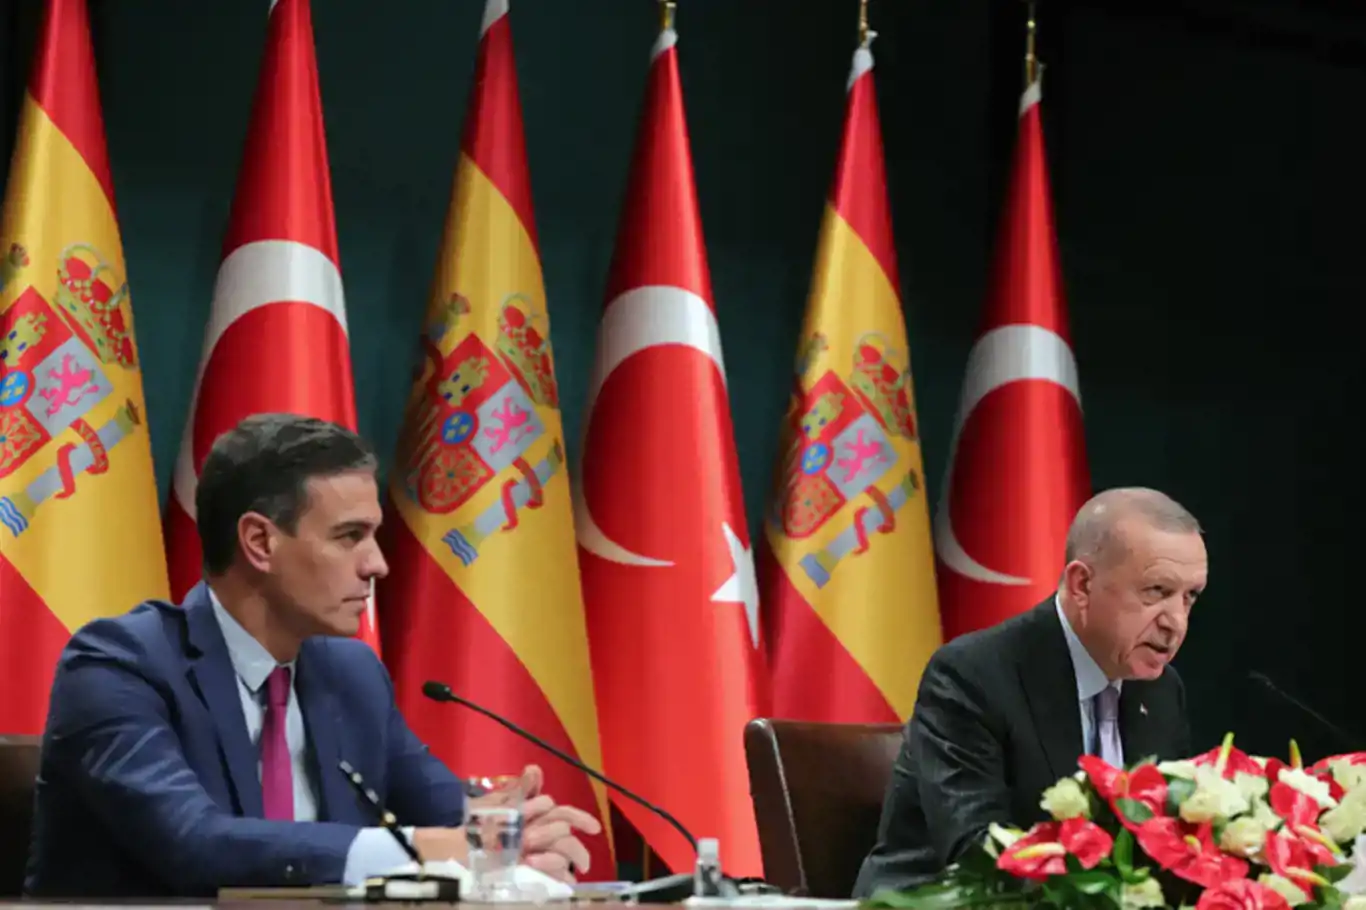 Spain commits to promoting positive EU-Türkiye relations during presidency